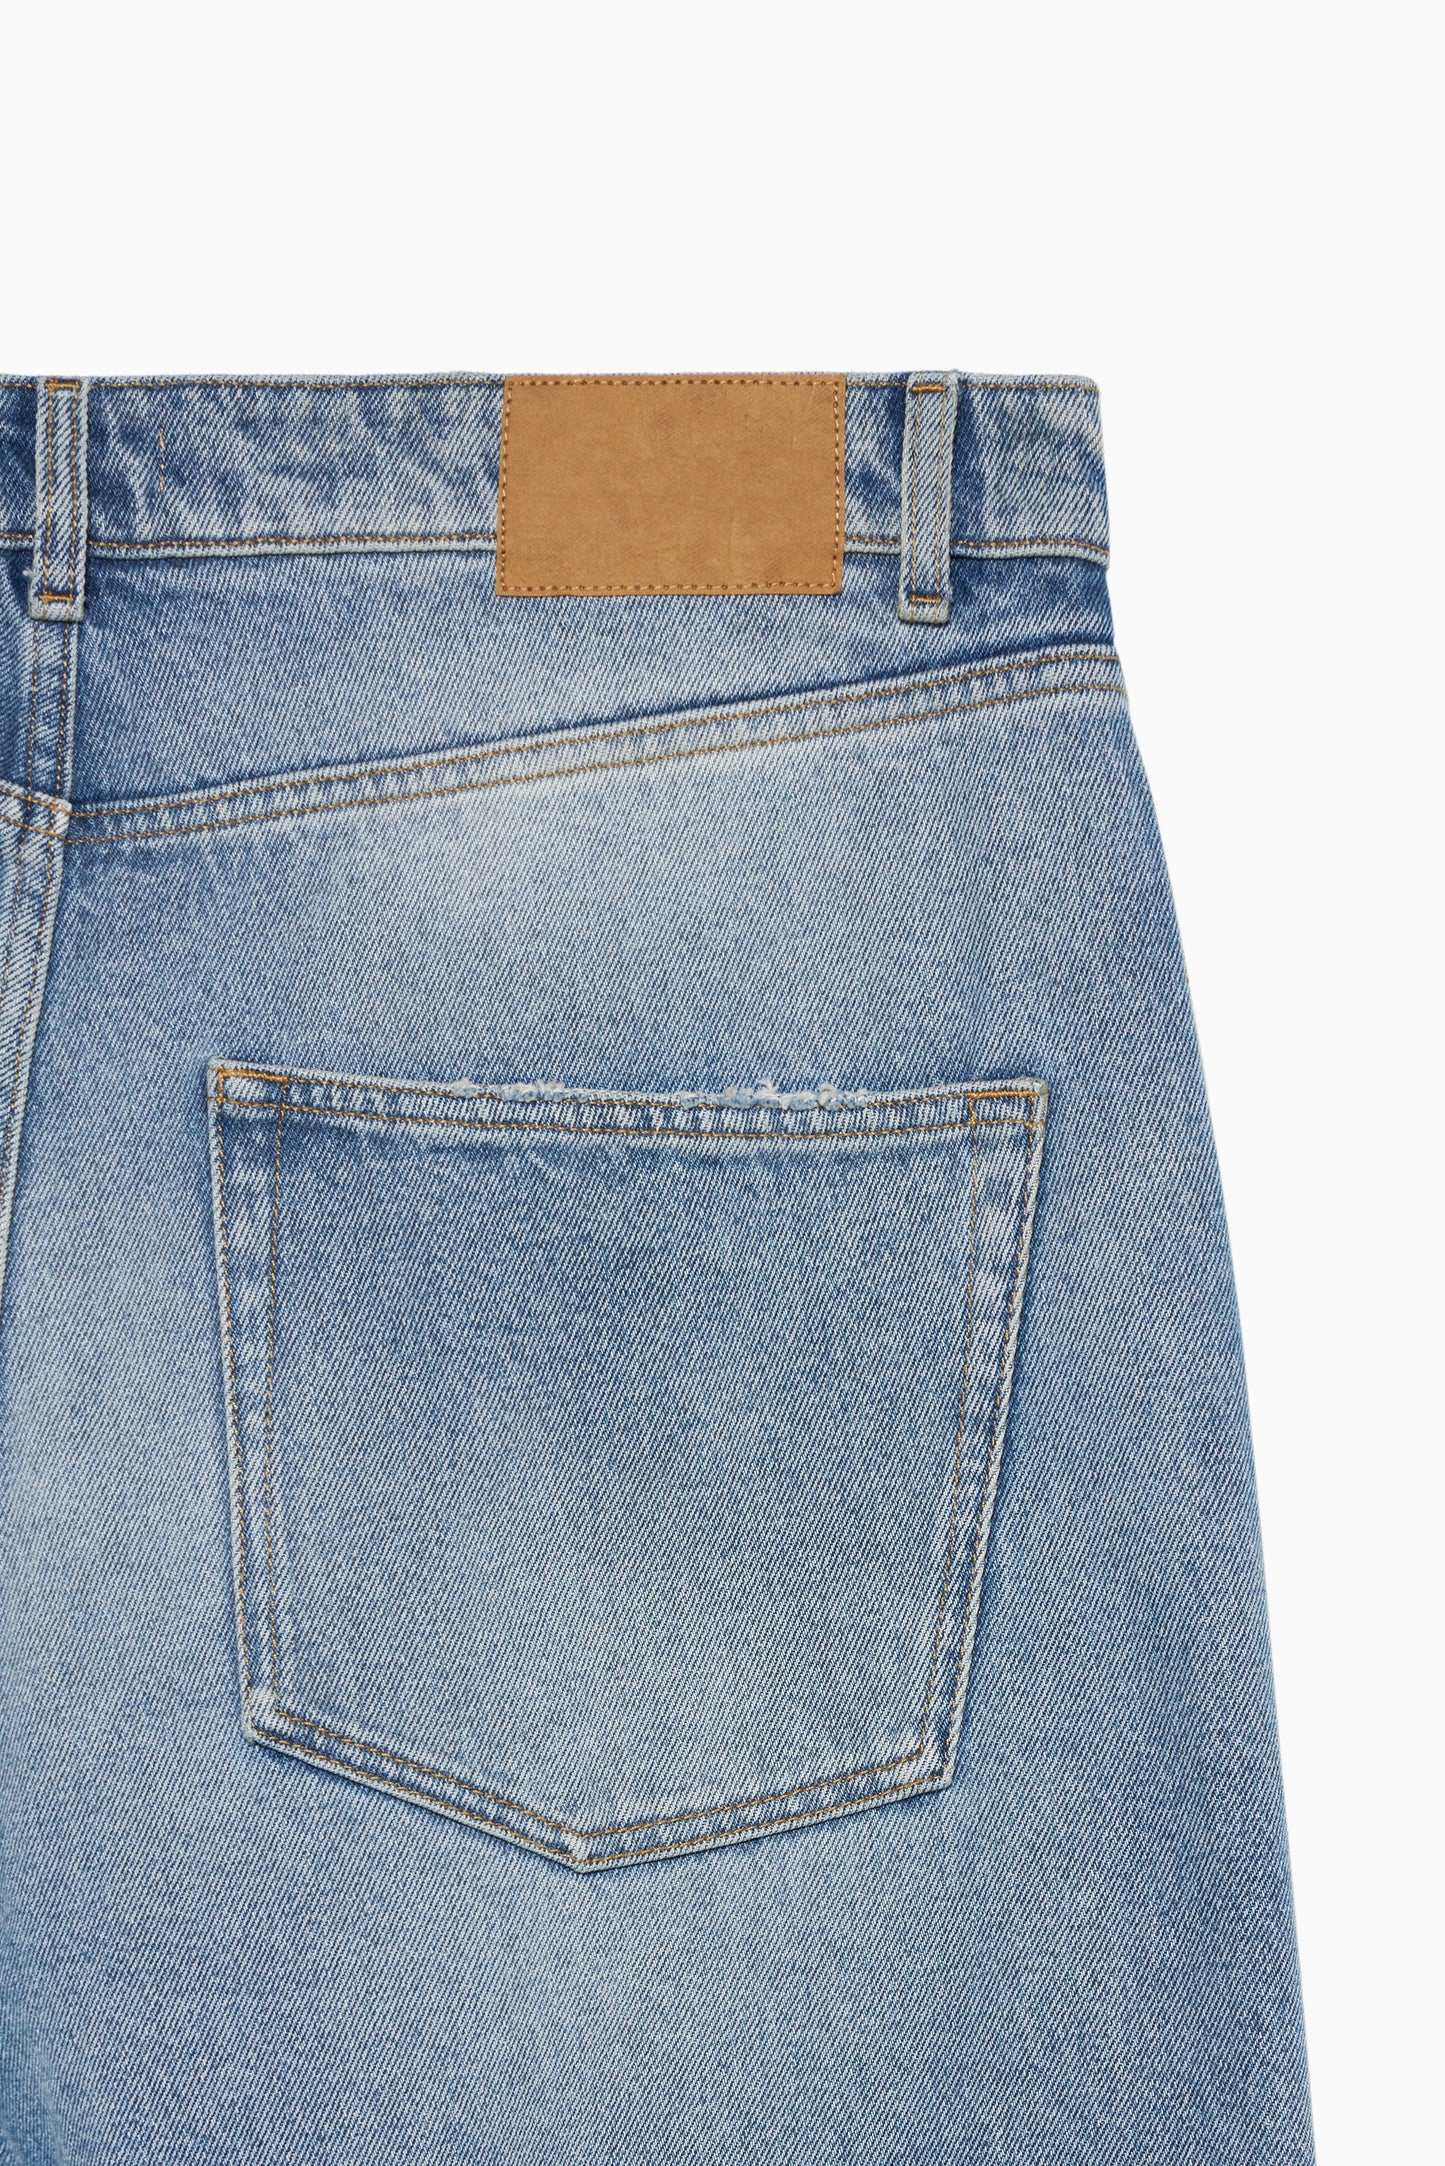 Woman's Y2k Denim Jeans